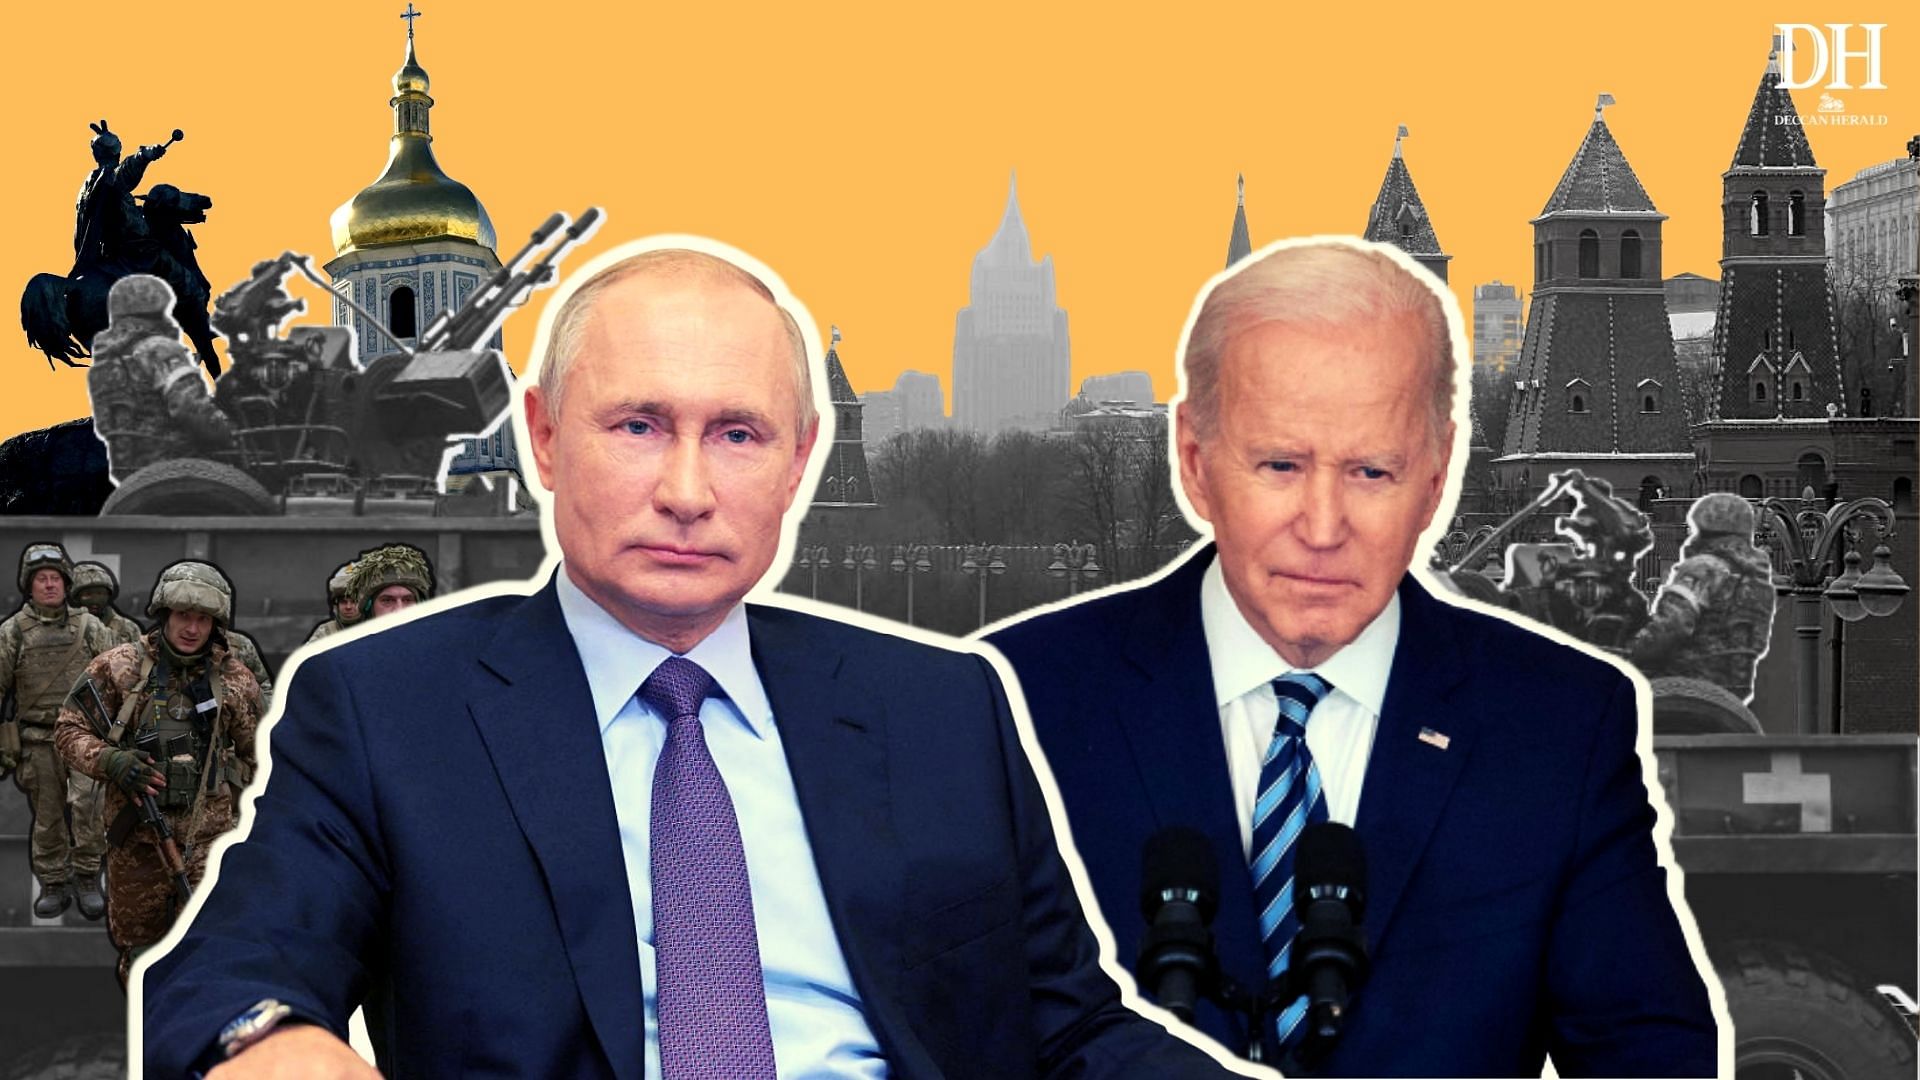 President Joe Biden last week said Russian President Vladimir Putin "is a war criminal" for attacking Ukraine. Credit: DH Creative